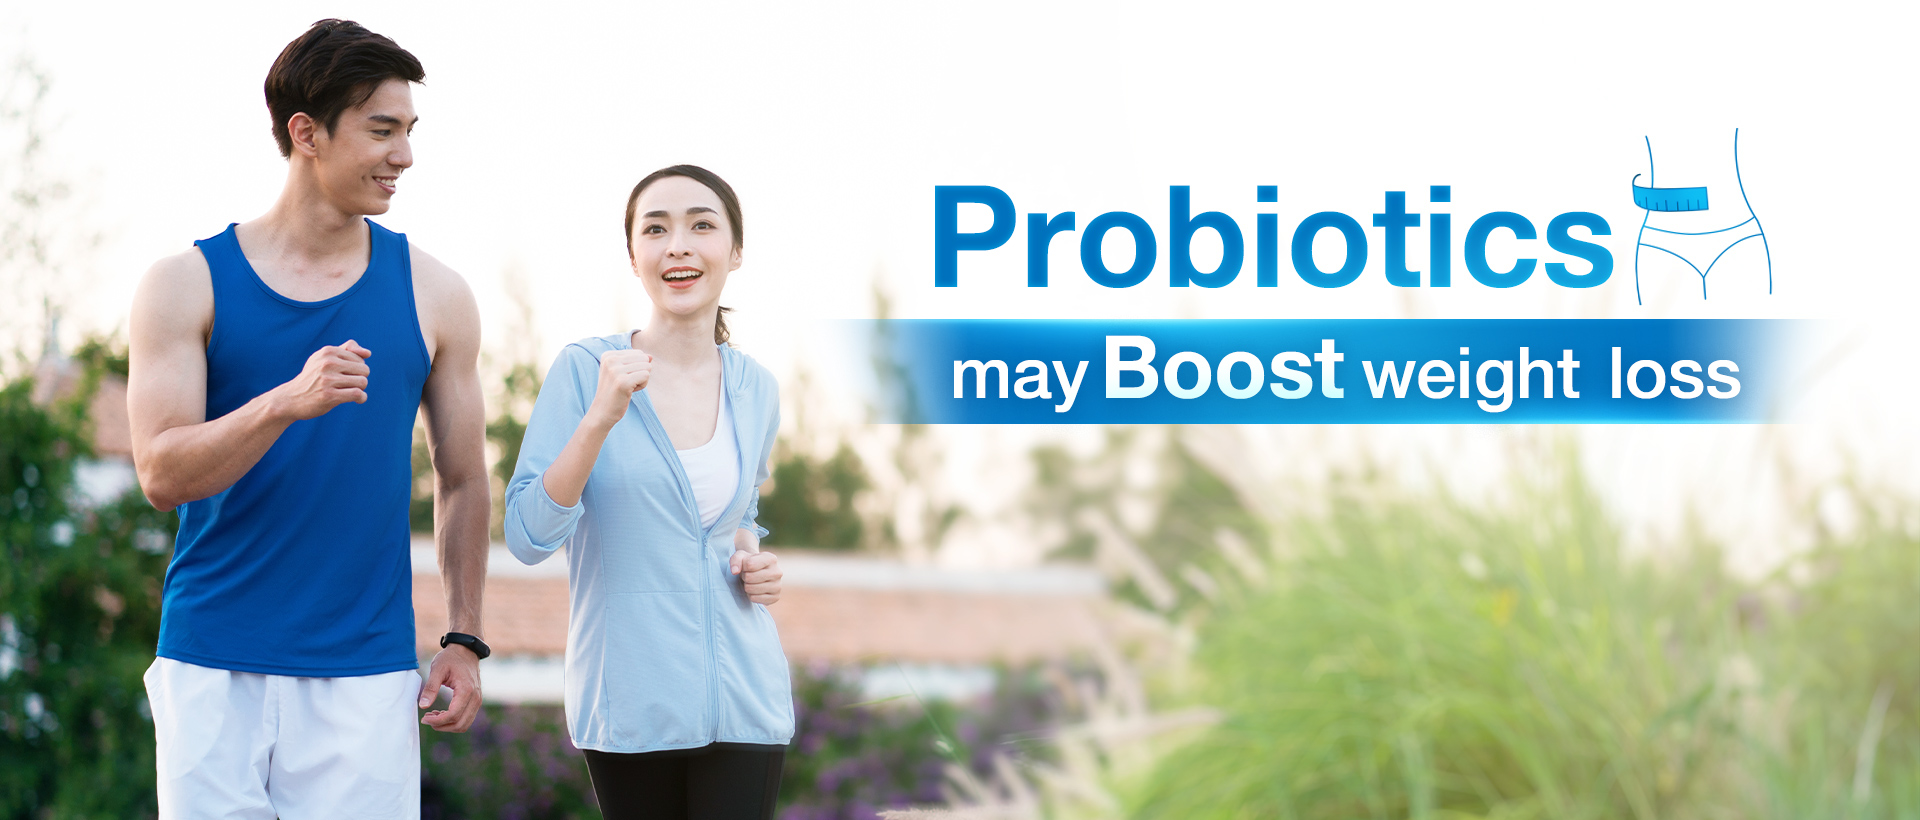 Probiotics may boost weight loss